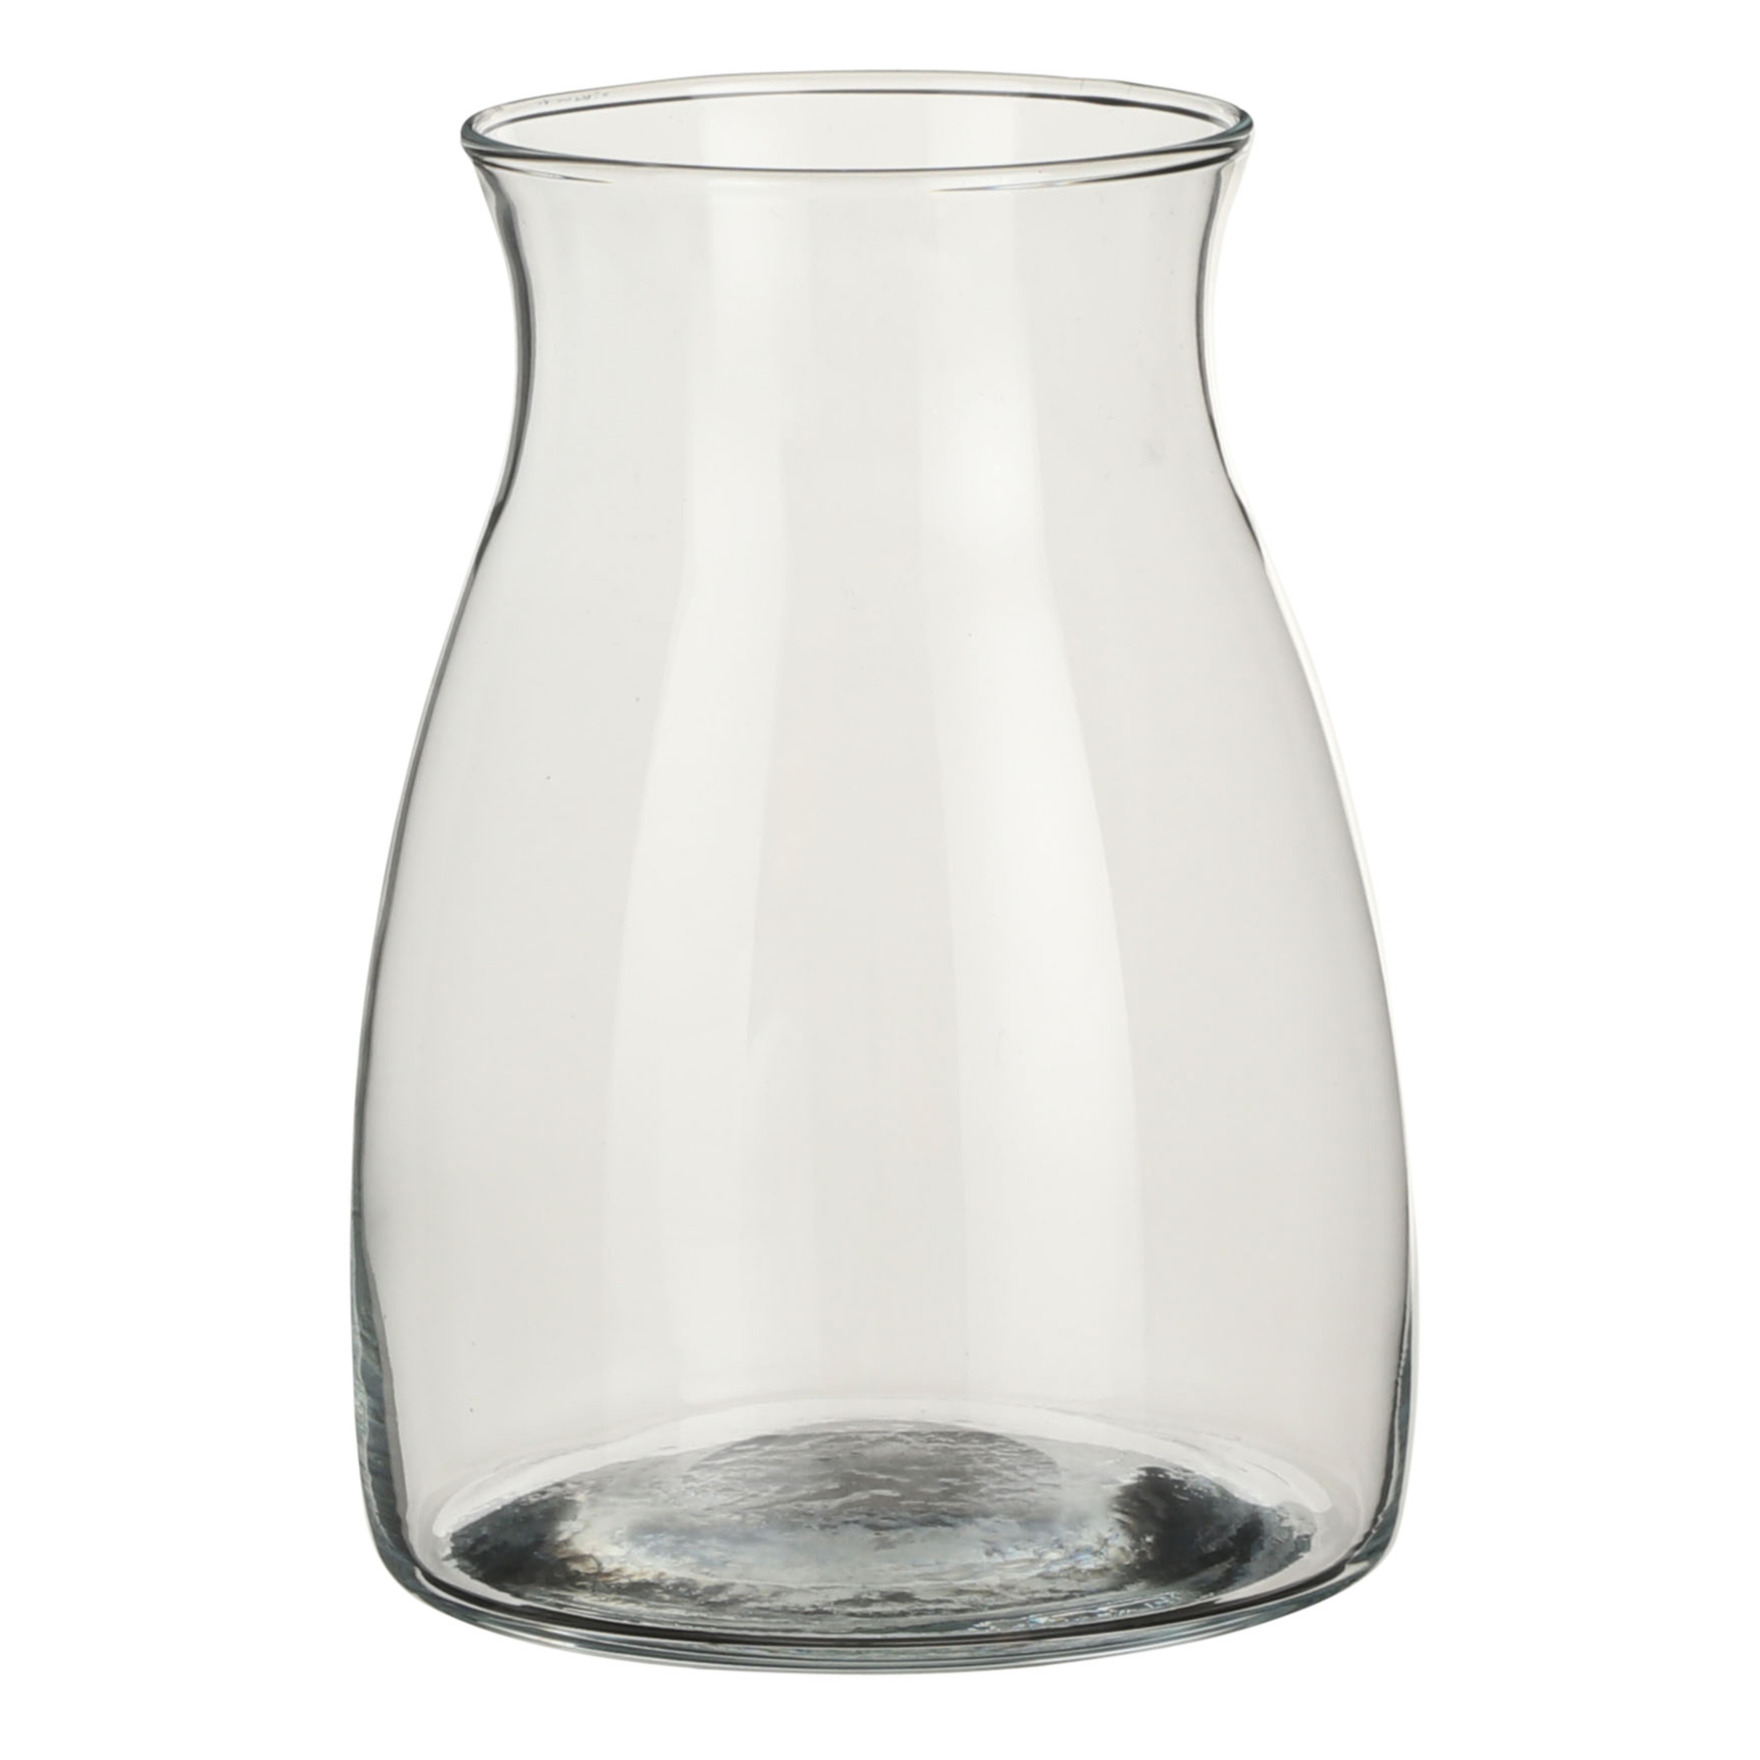 1x Transparante glazen bloemen vaas/vazen 20 cm hoog